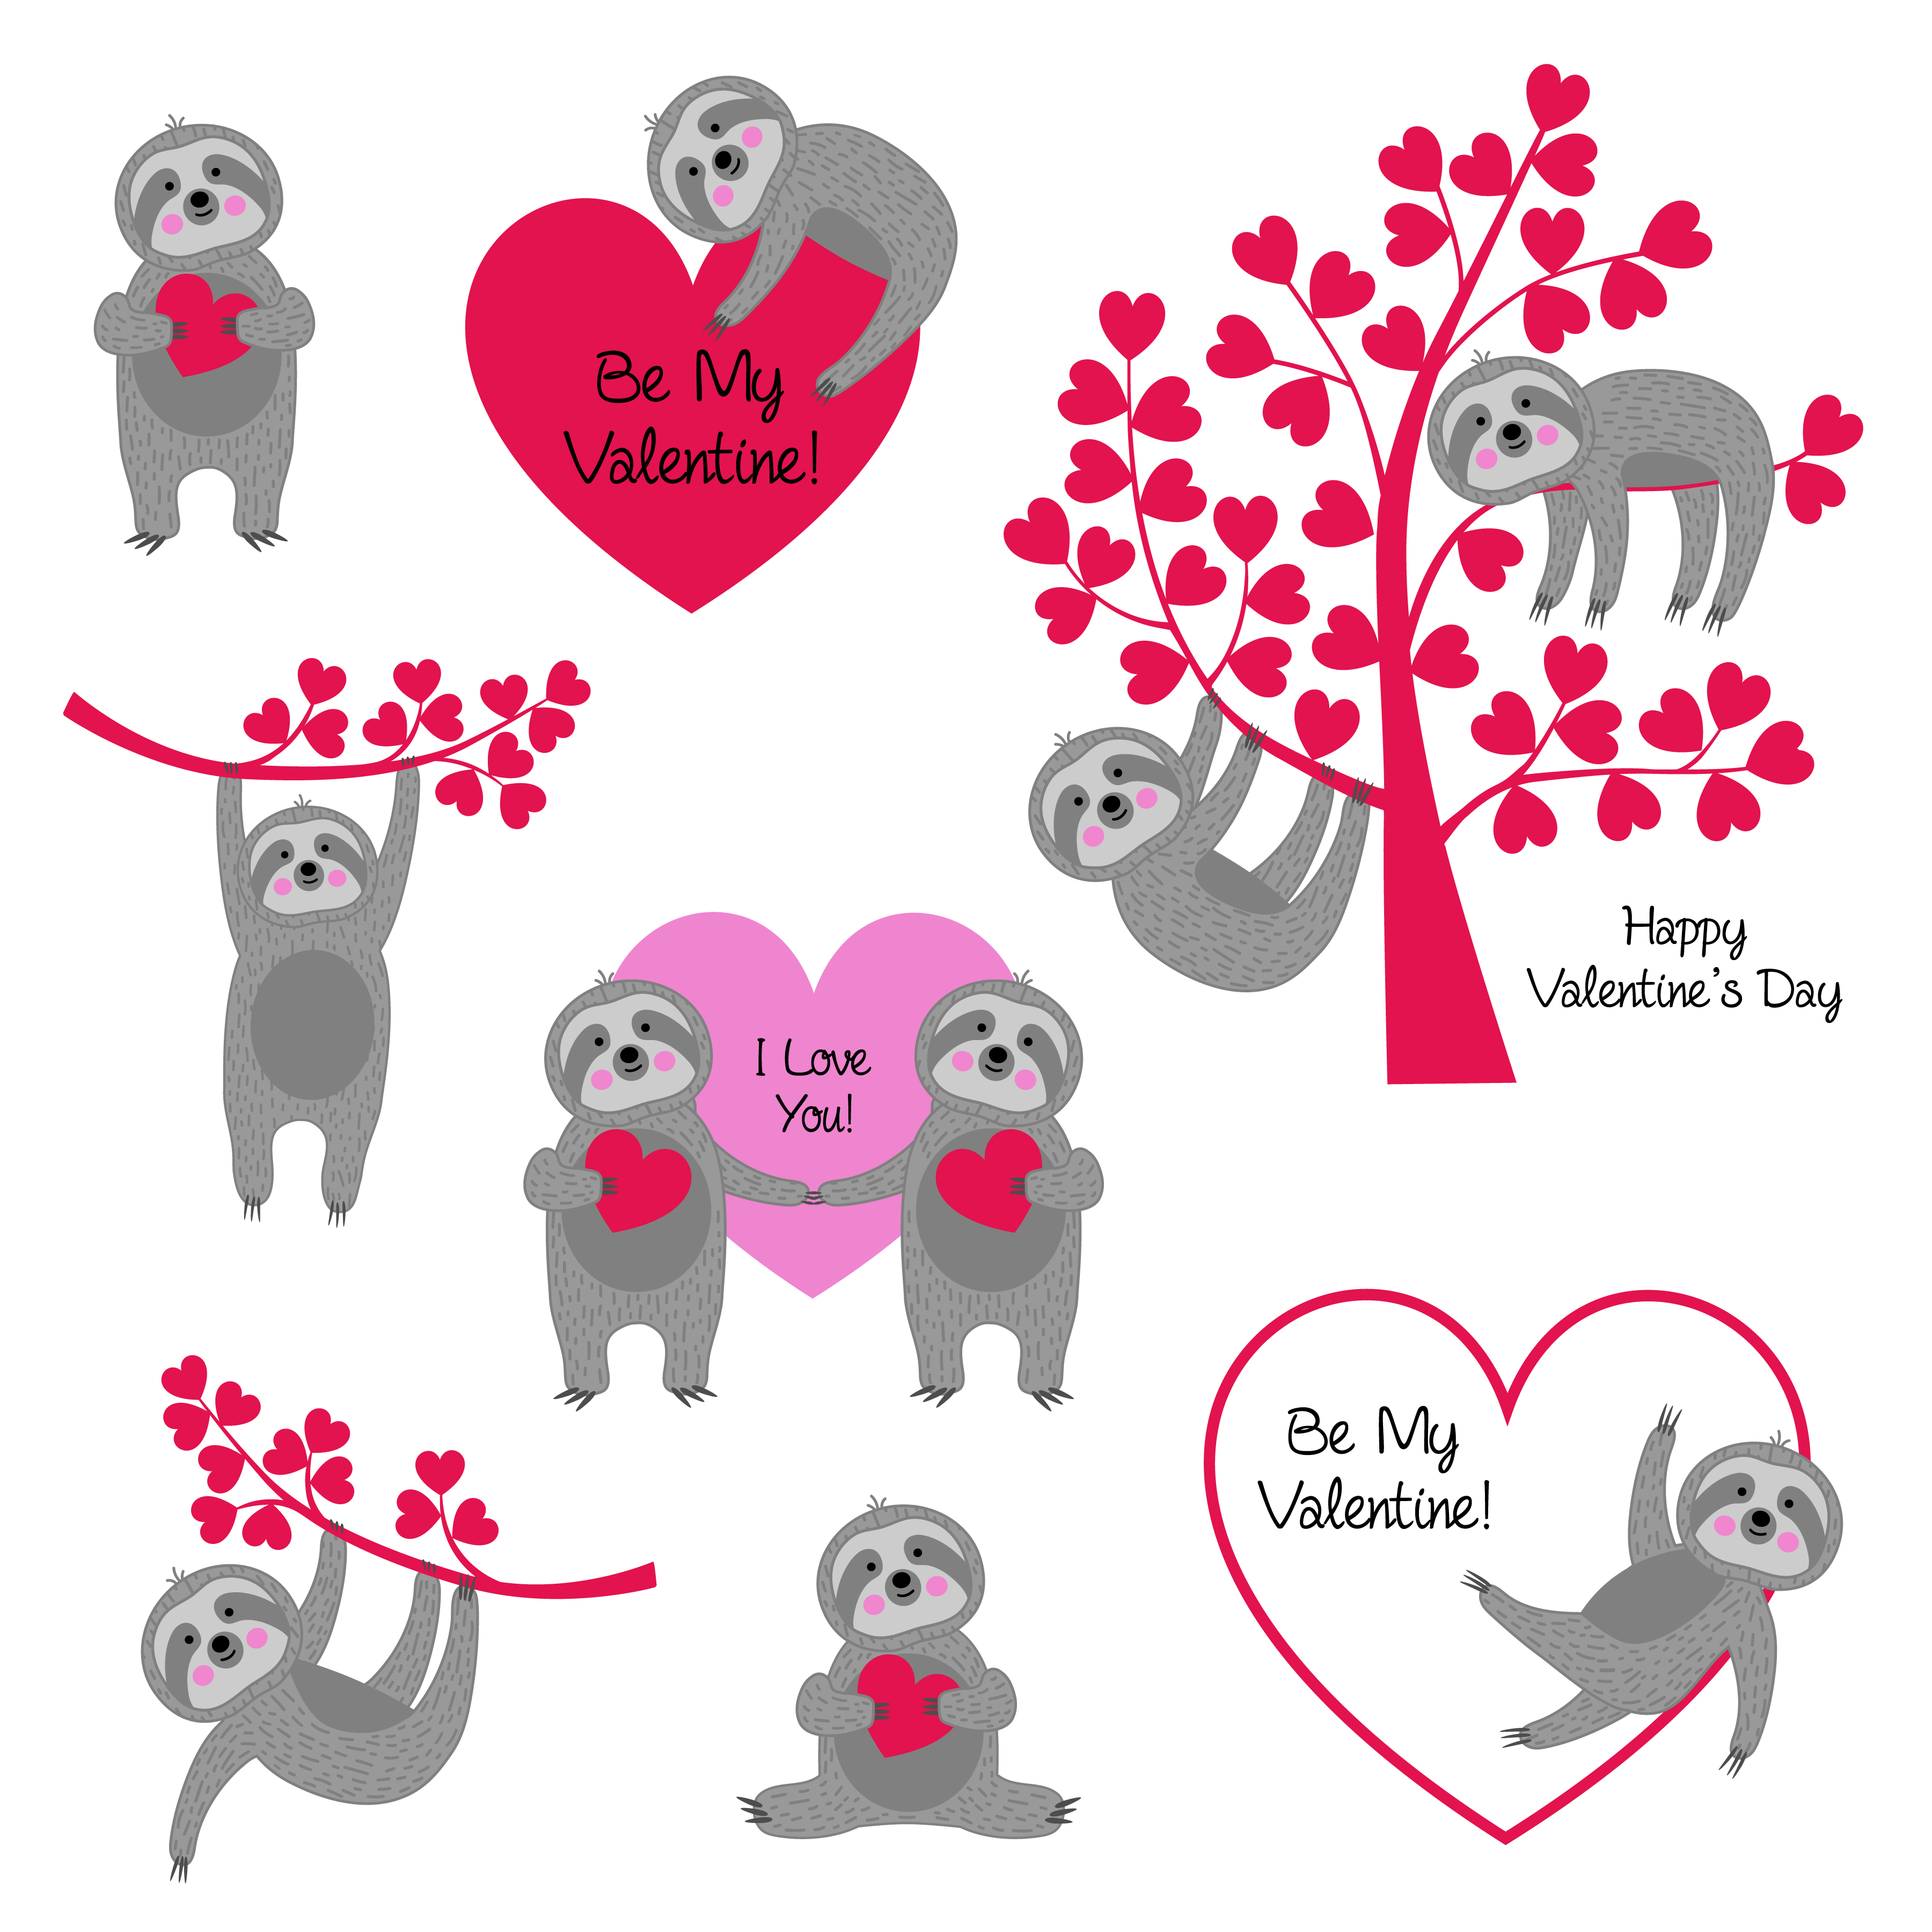 sloth valentines Free Vectors, Clipart Graphics